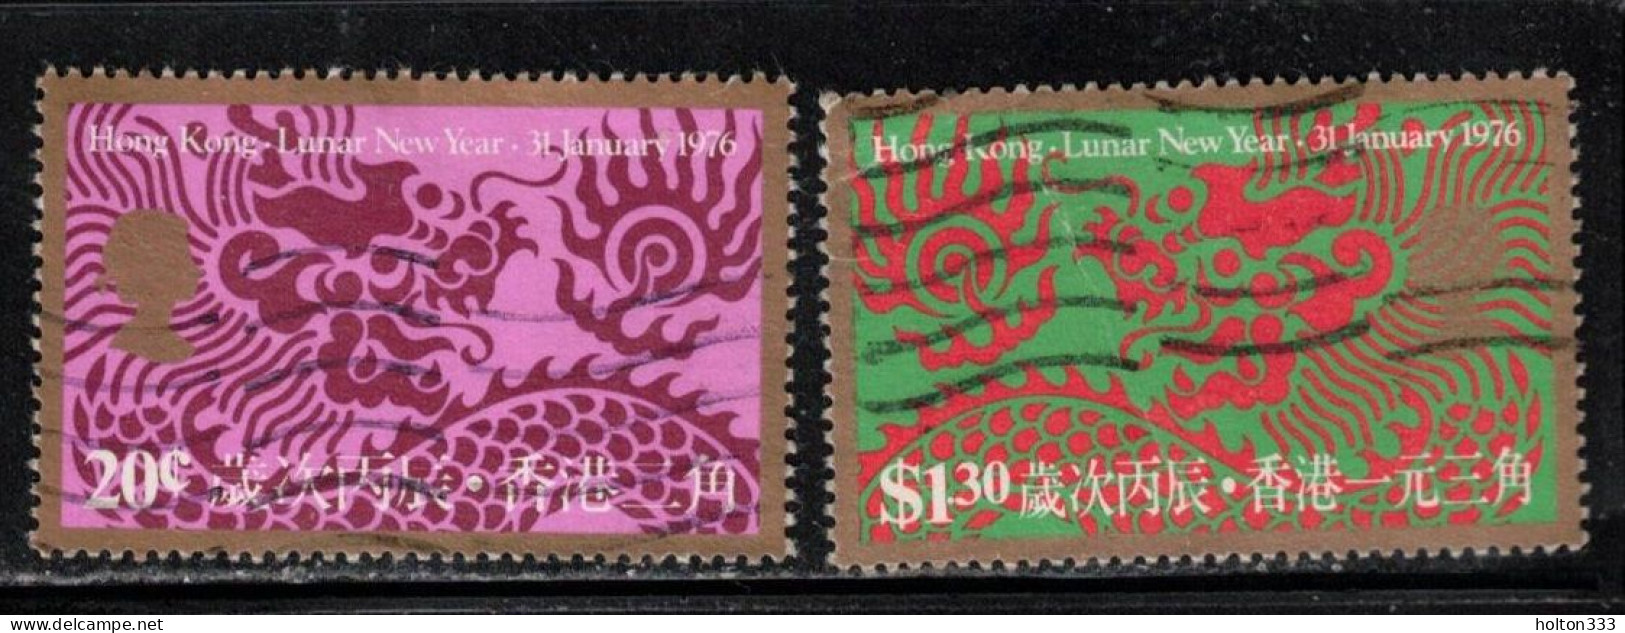 HONG KONG Scott # 312-13 Used - Lunar New Year 1976 - Usados